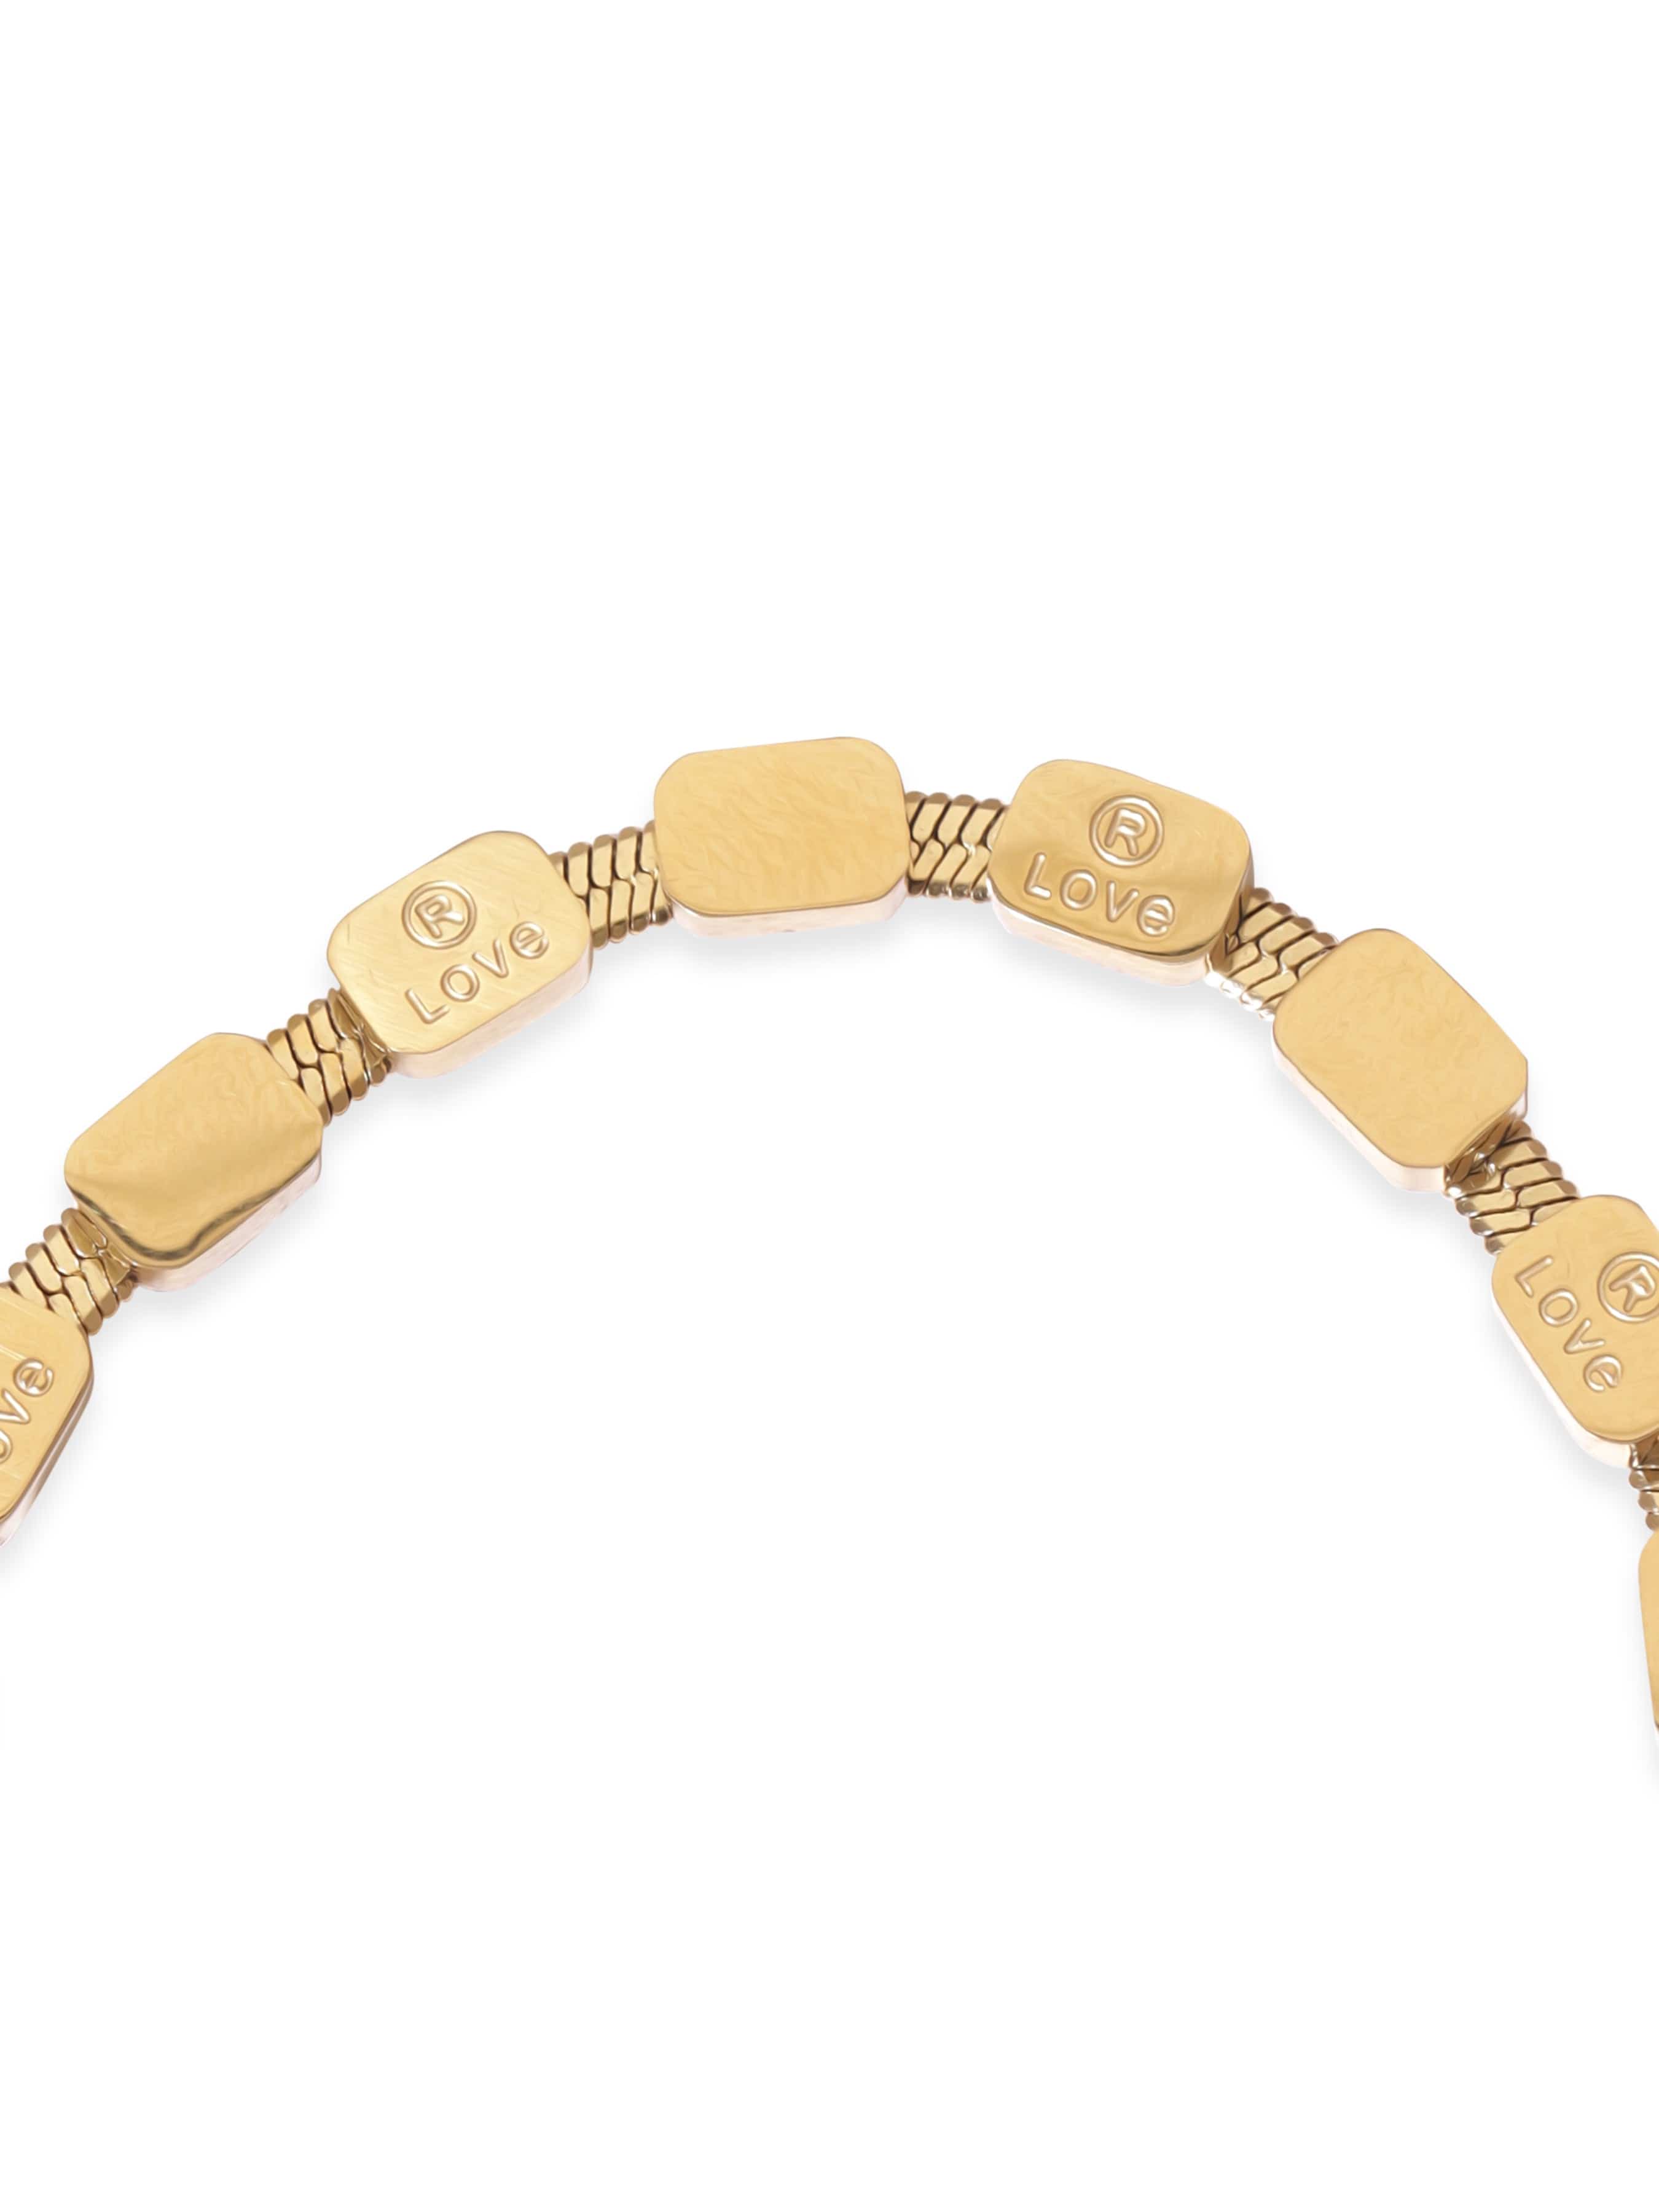 rubans voguish radiant glimmer gold tone stainless steel bracelet bangles bracelets 34417573232814